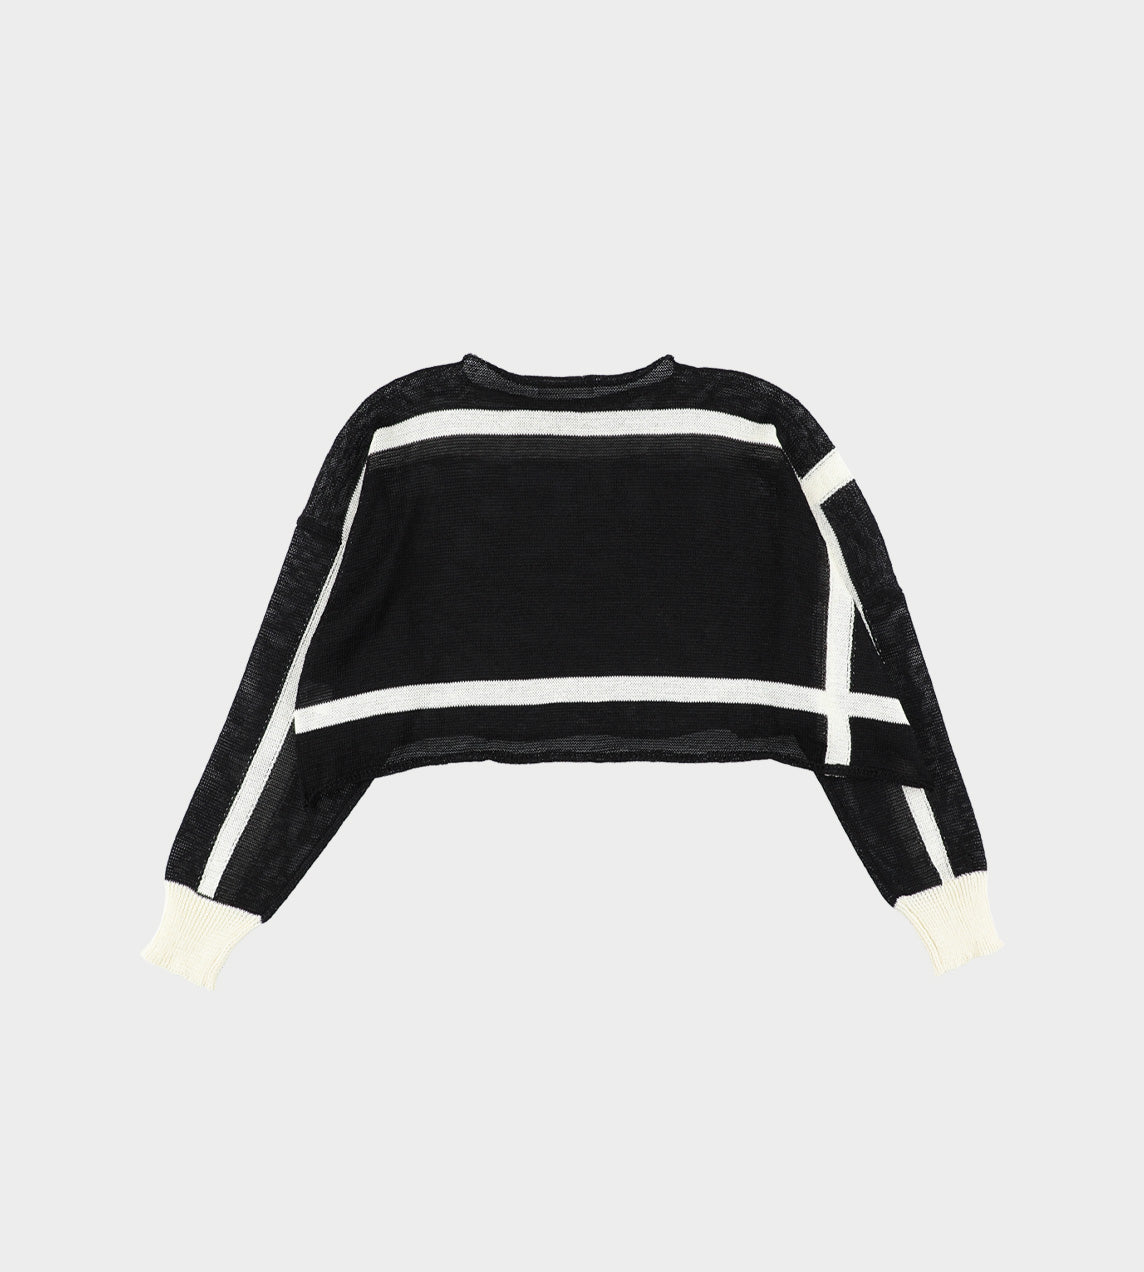 Sulvam - Short Knit Sweater Black/White